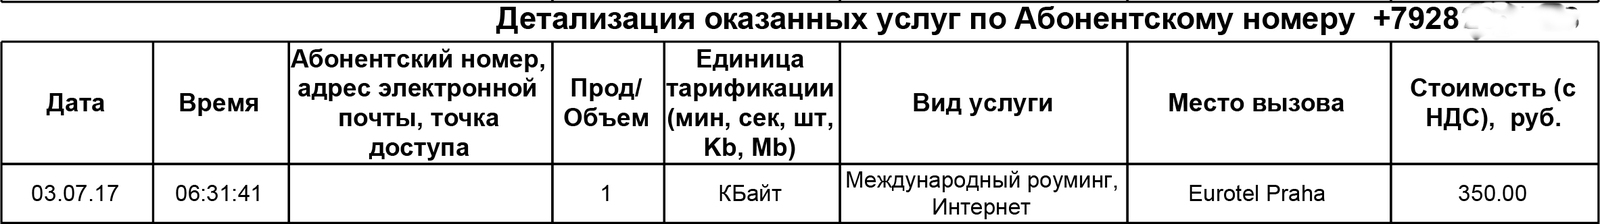 New Megafon tariff: 1 kb - 350 rubles. - My, Megaphone, Crash